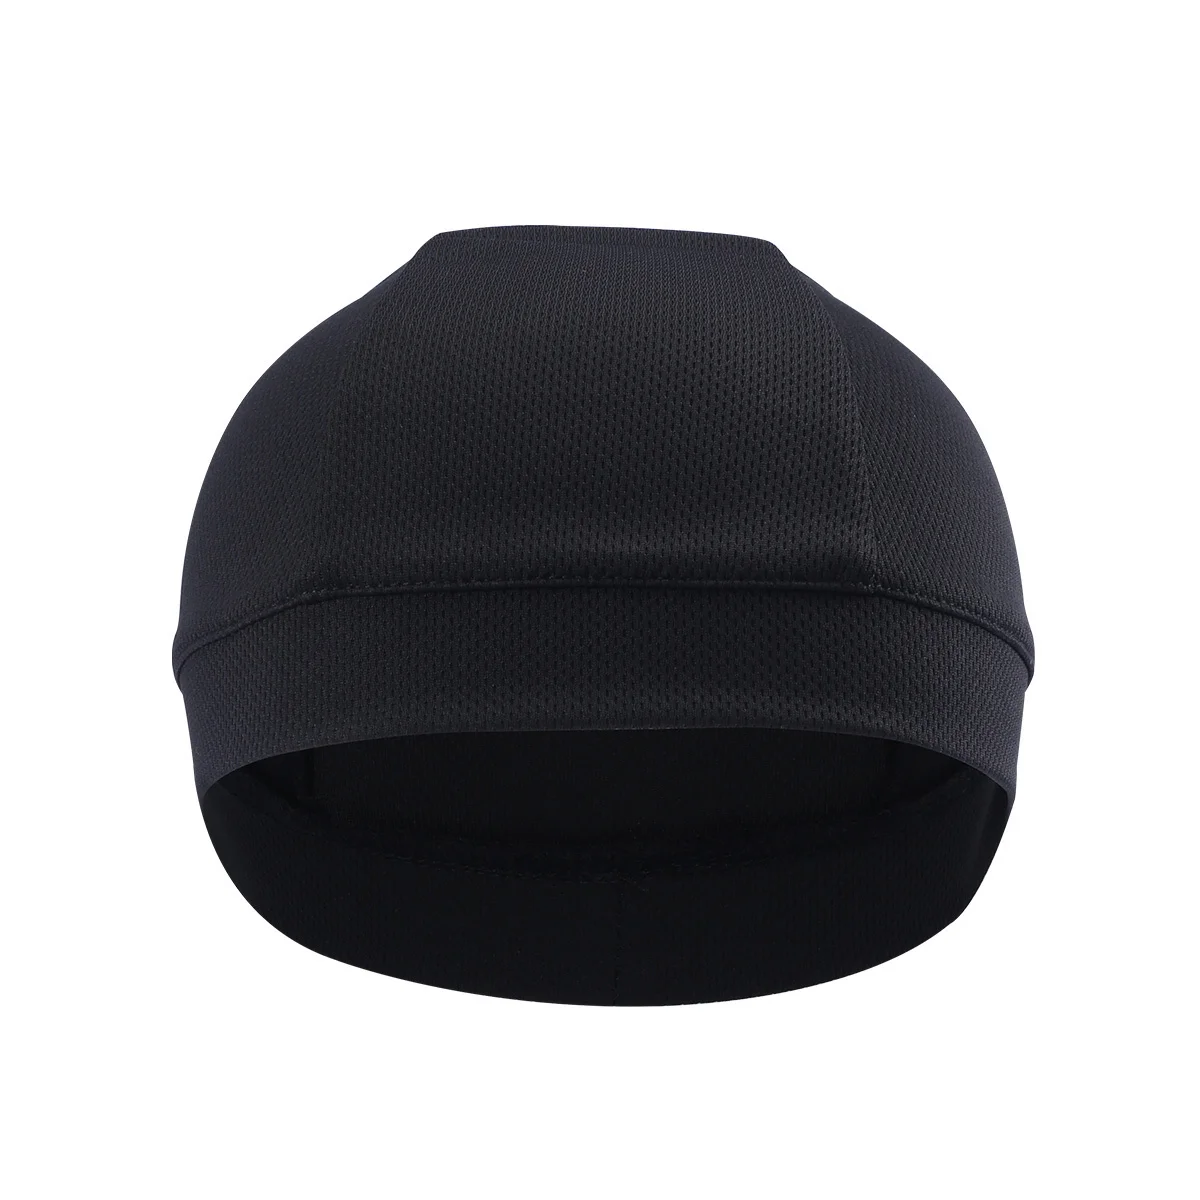 Мотоциклетный шлем Внутренняя крышка Coolmax крышка быстросохнущая дышащая шляпа жокейская шапочка под шлем шапочка для шлема